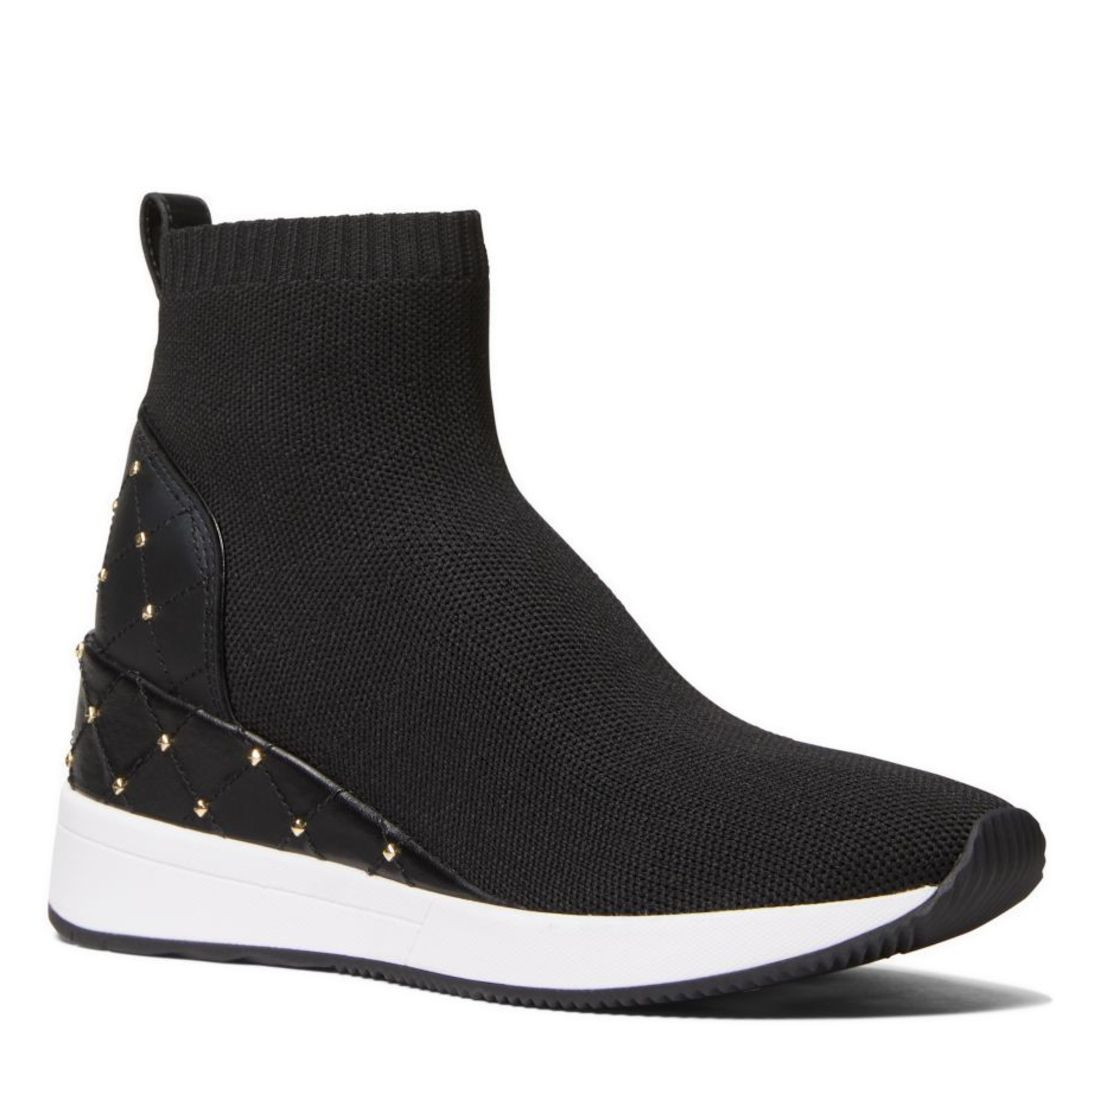 Michael Kors Skyler Bootie sock sneaker in black mesh and leather with studs